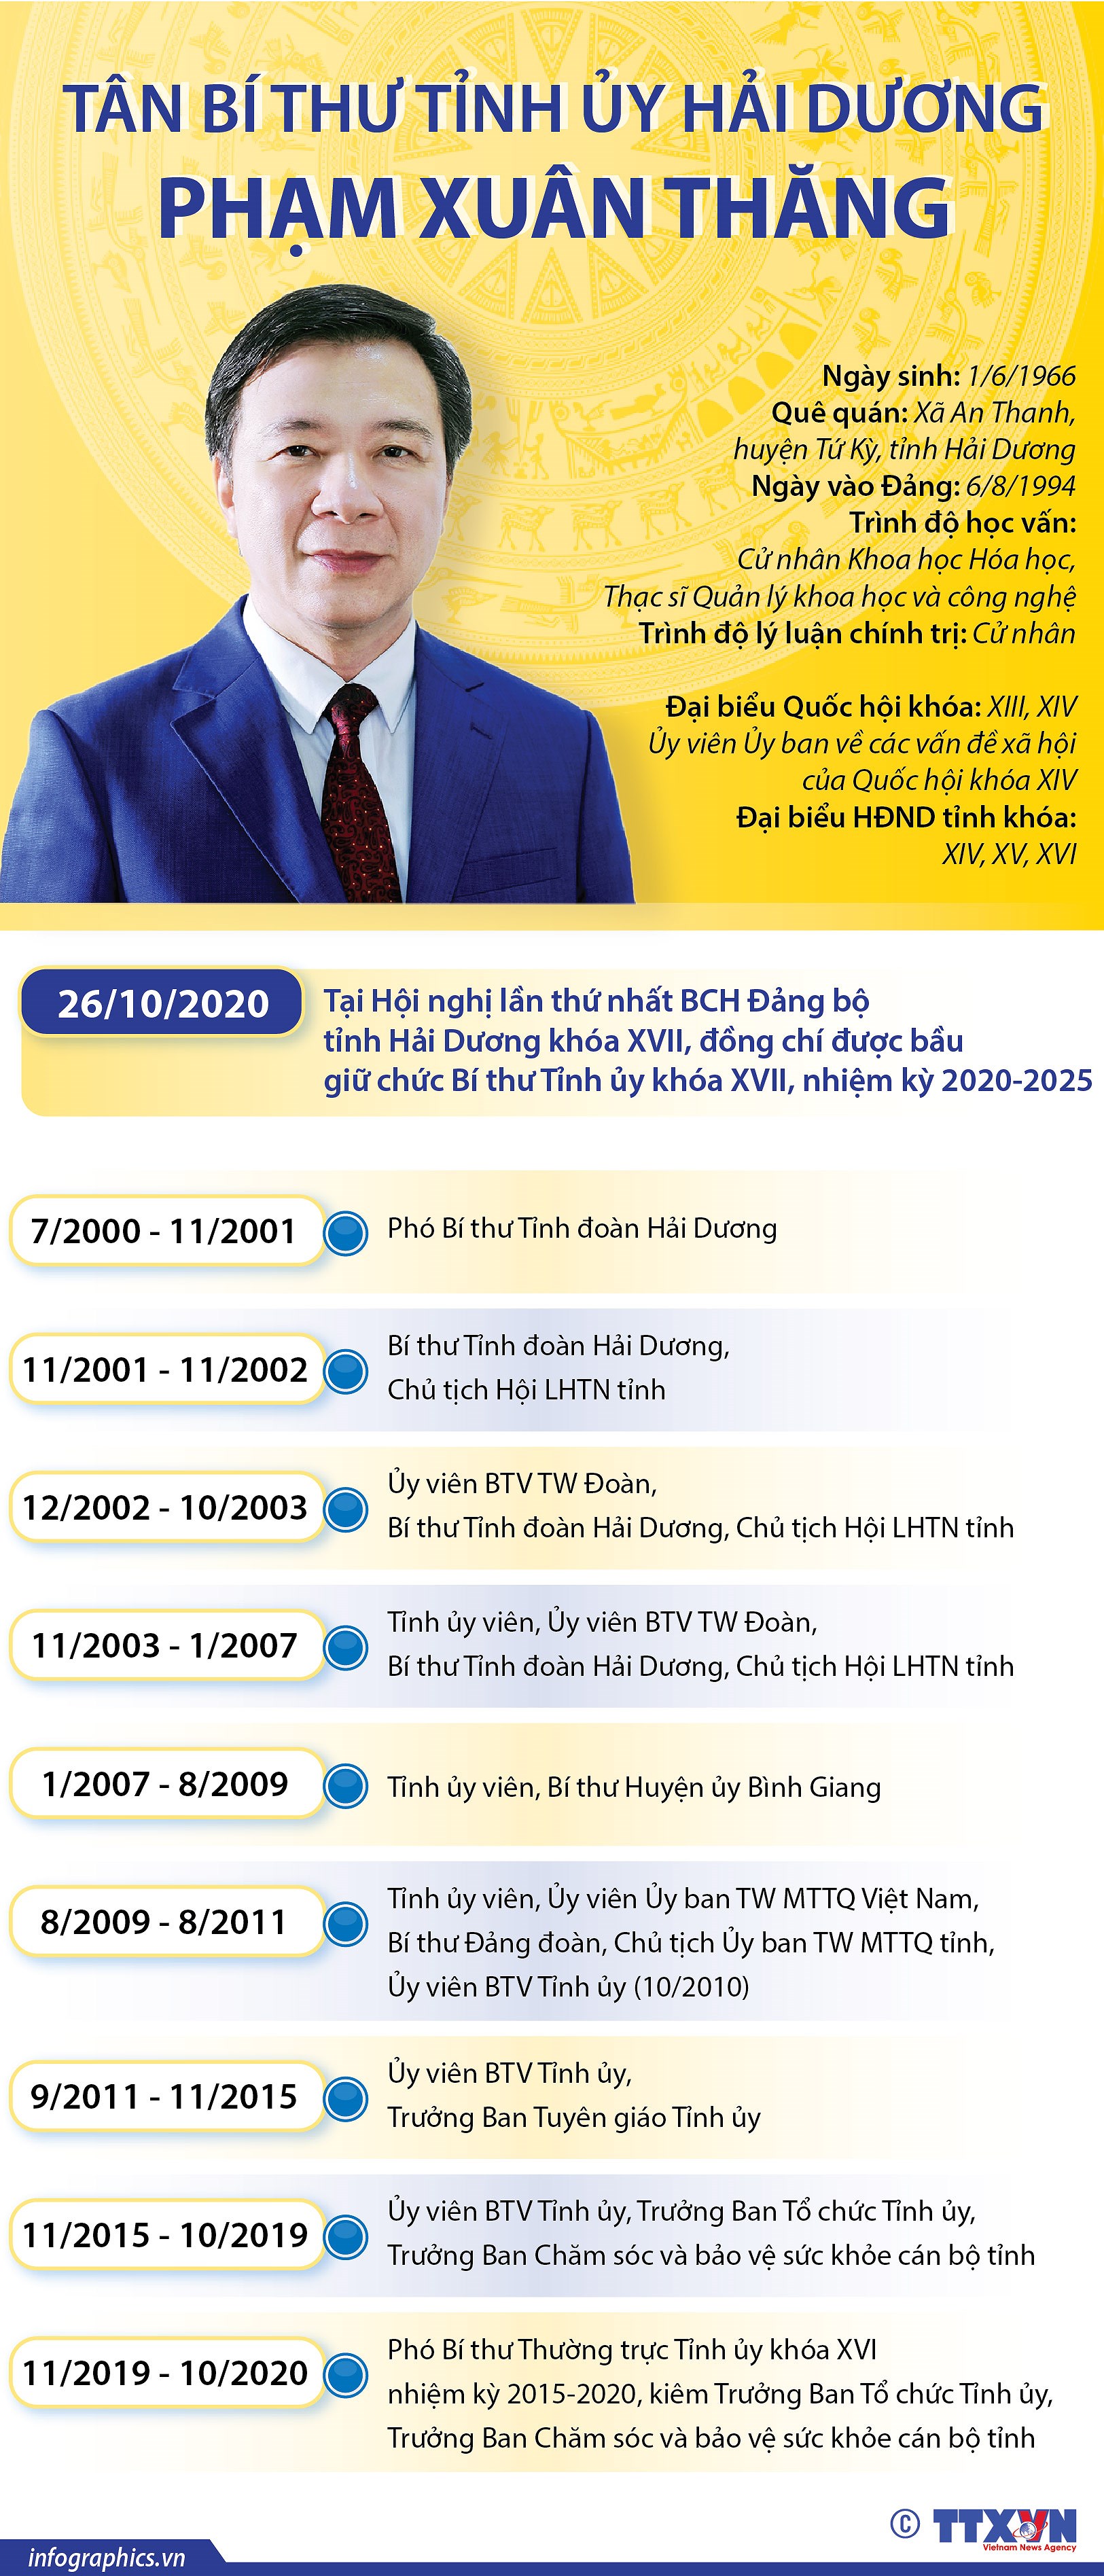 [Infographics] Tan Bi thu Tinh uy Hai Duong Pham Xuan Thang hinh anh 1